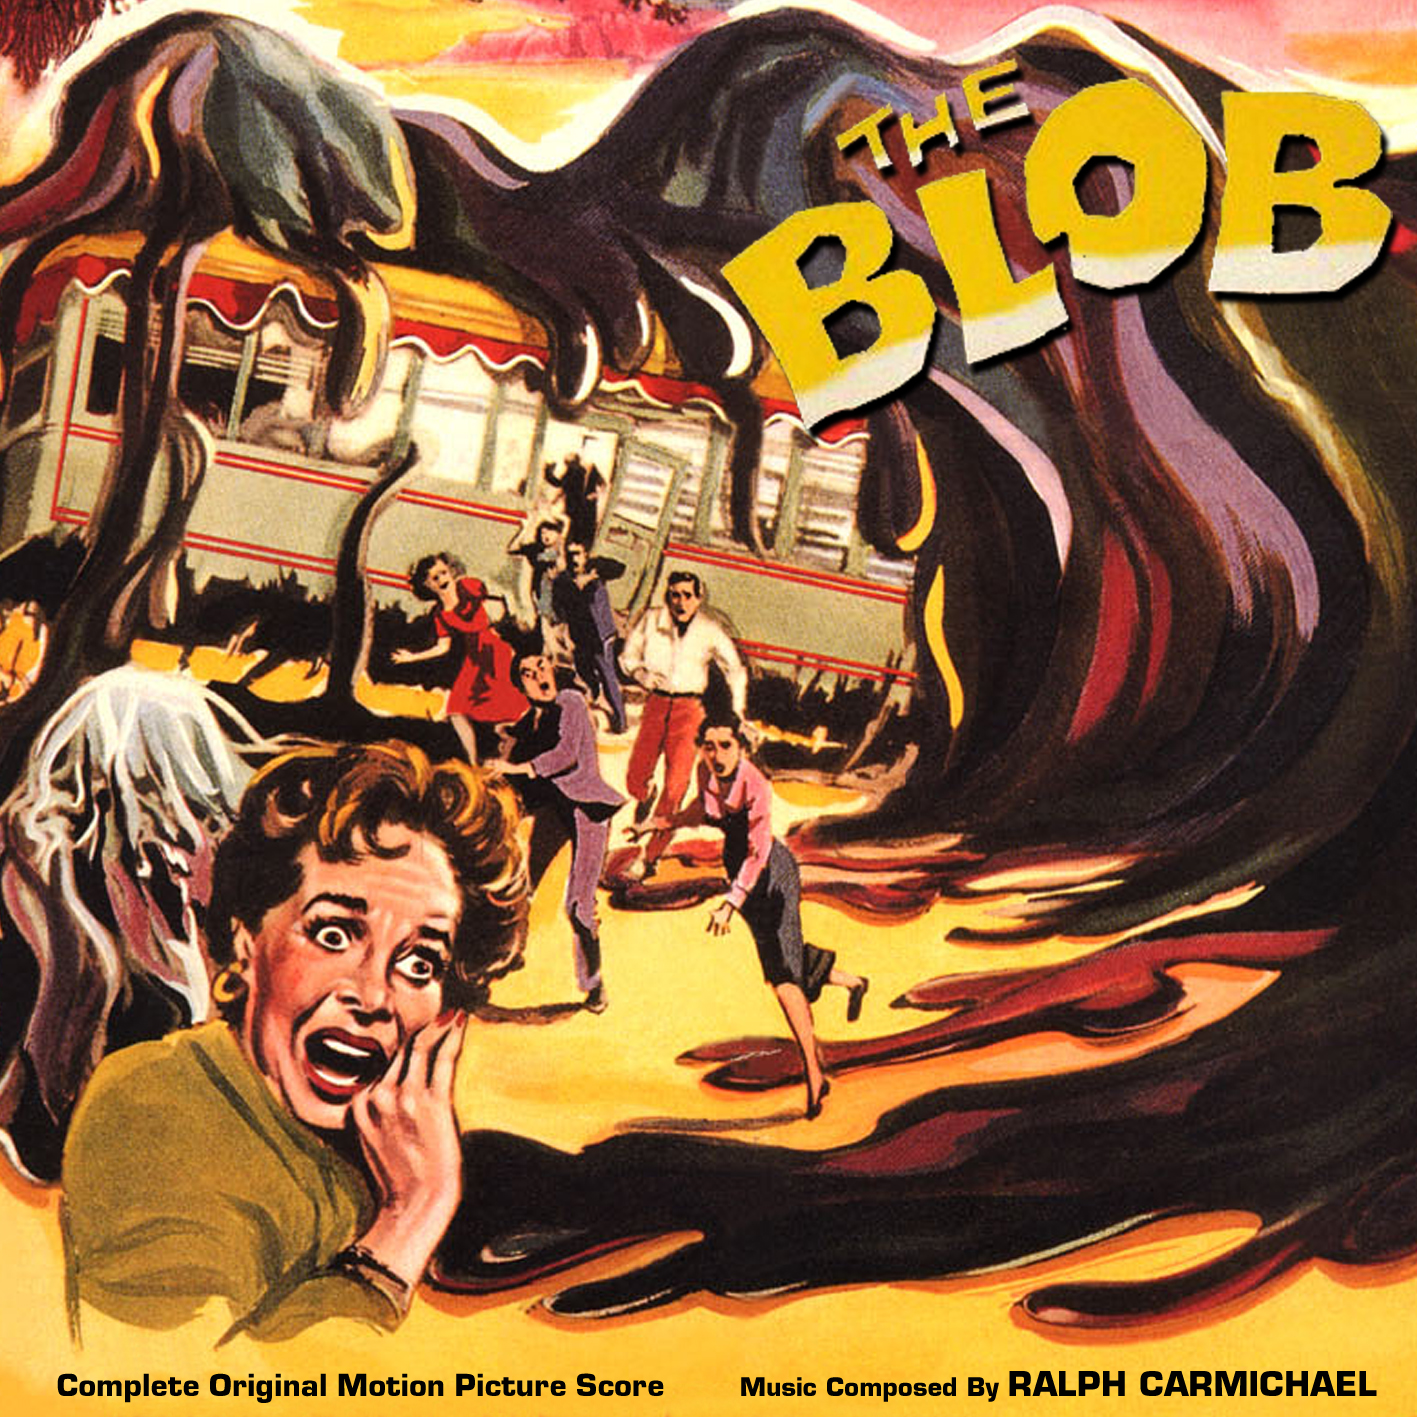 Blob-Town-The-Blob-1958-Documentary-@-Phoenixville-Pennsylvania-by-James-Rolfe.jpg